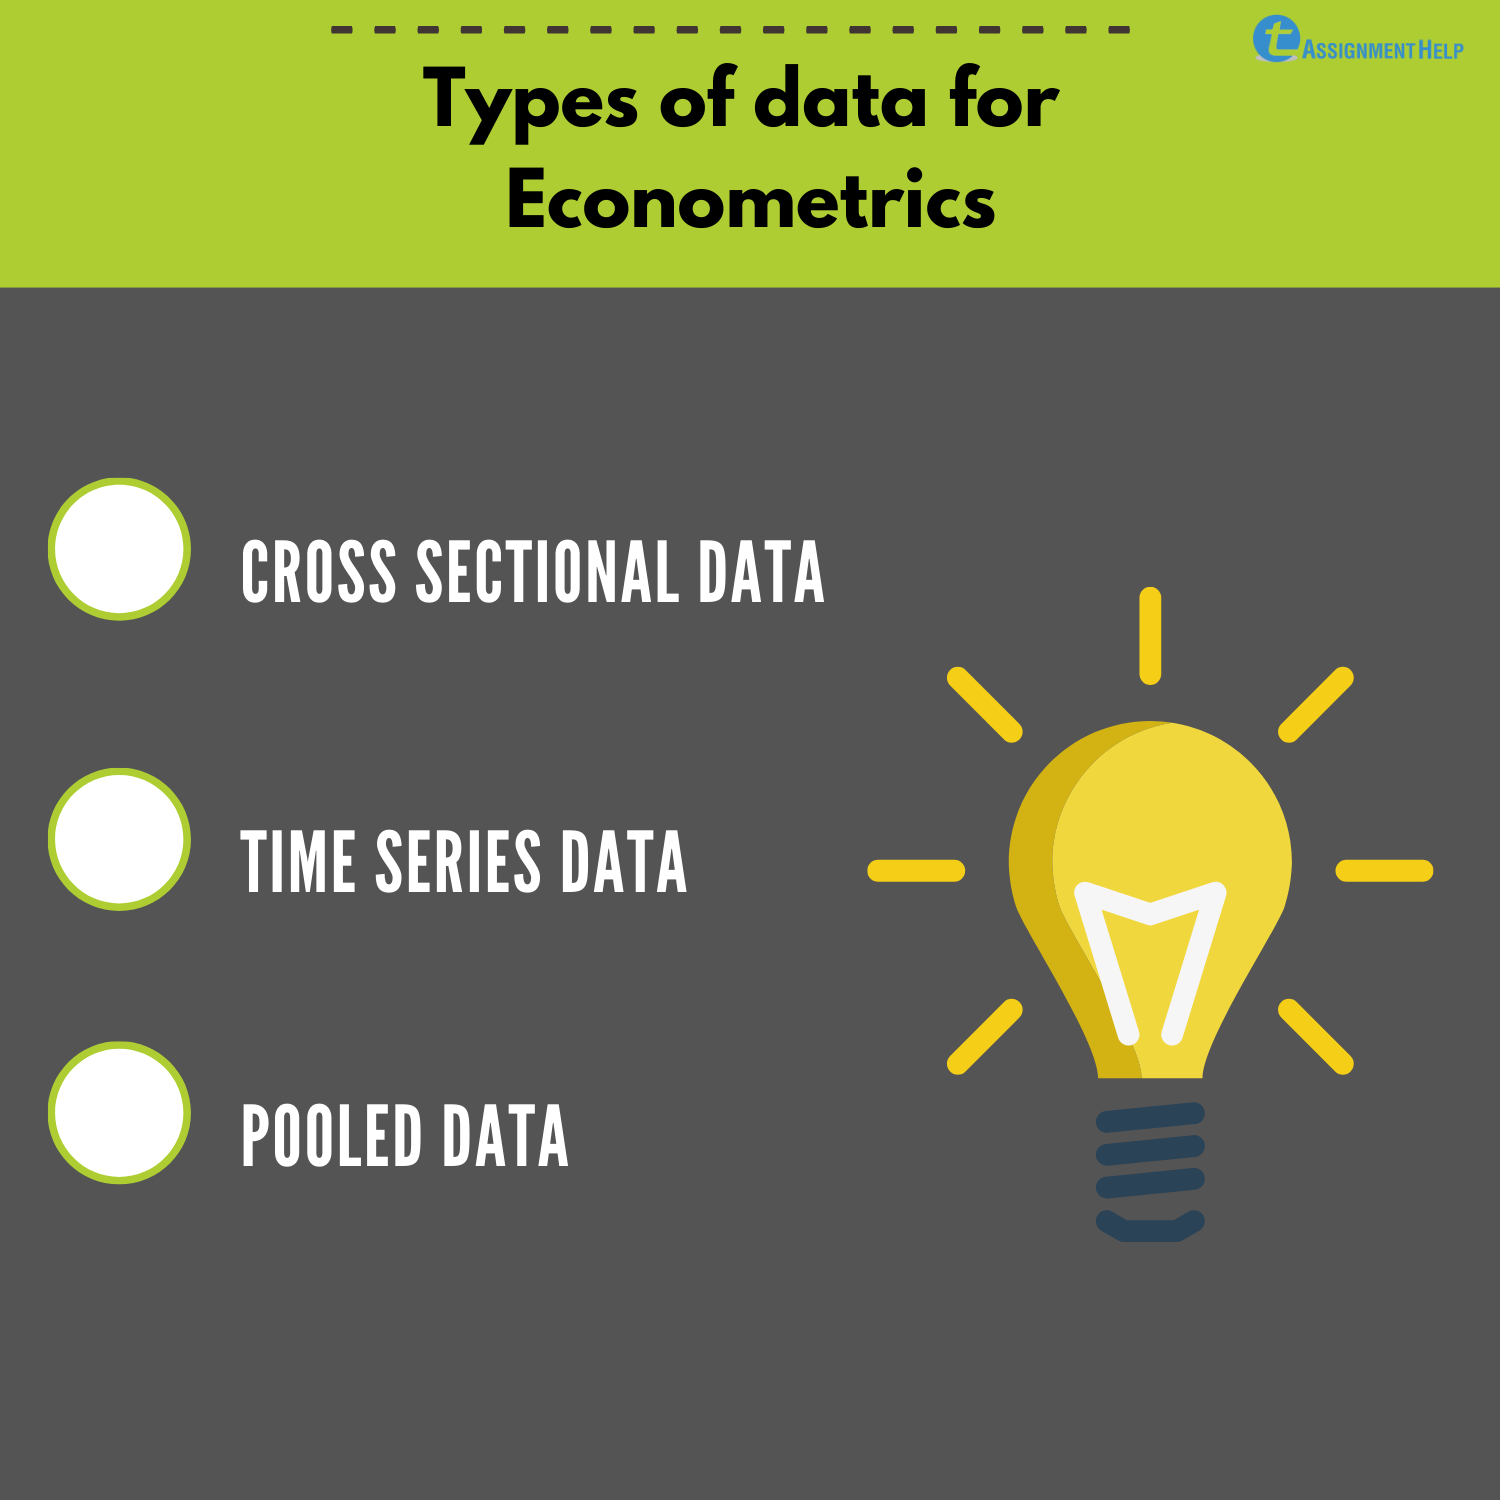 cross sectional data